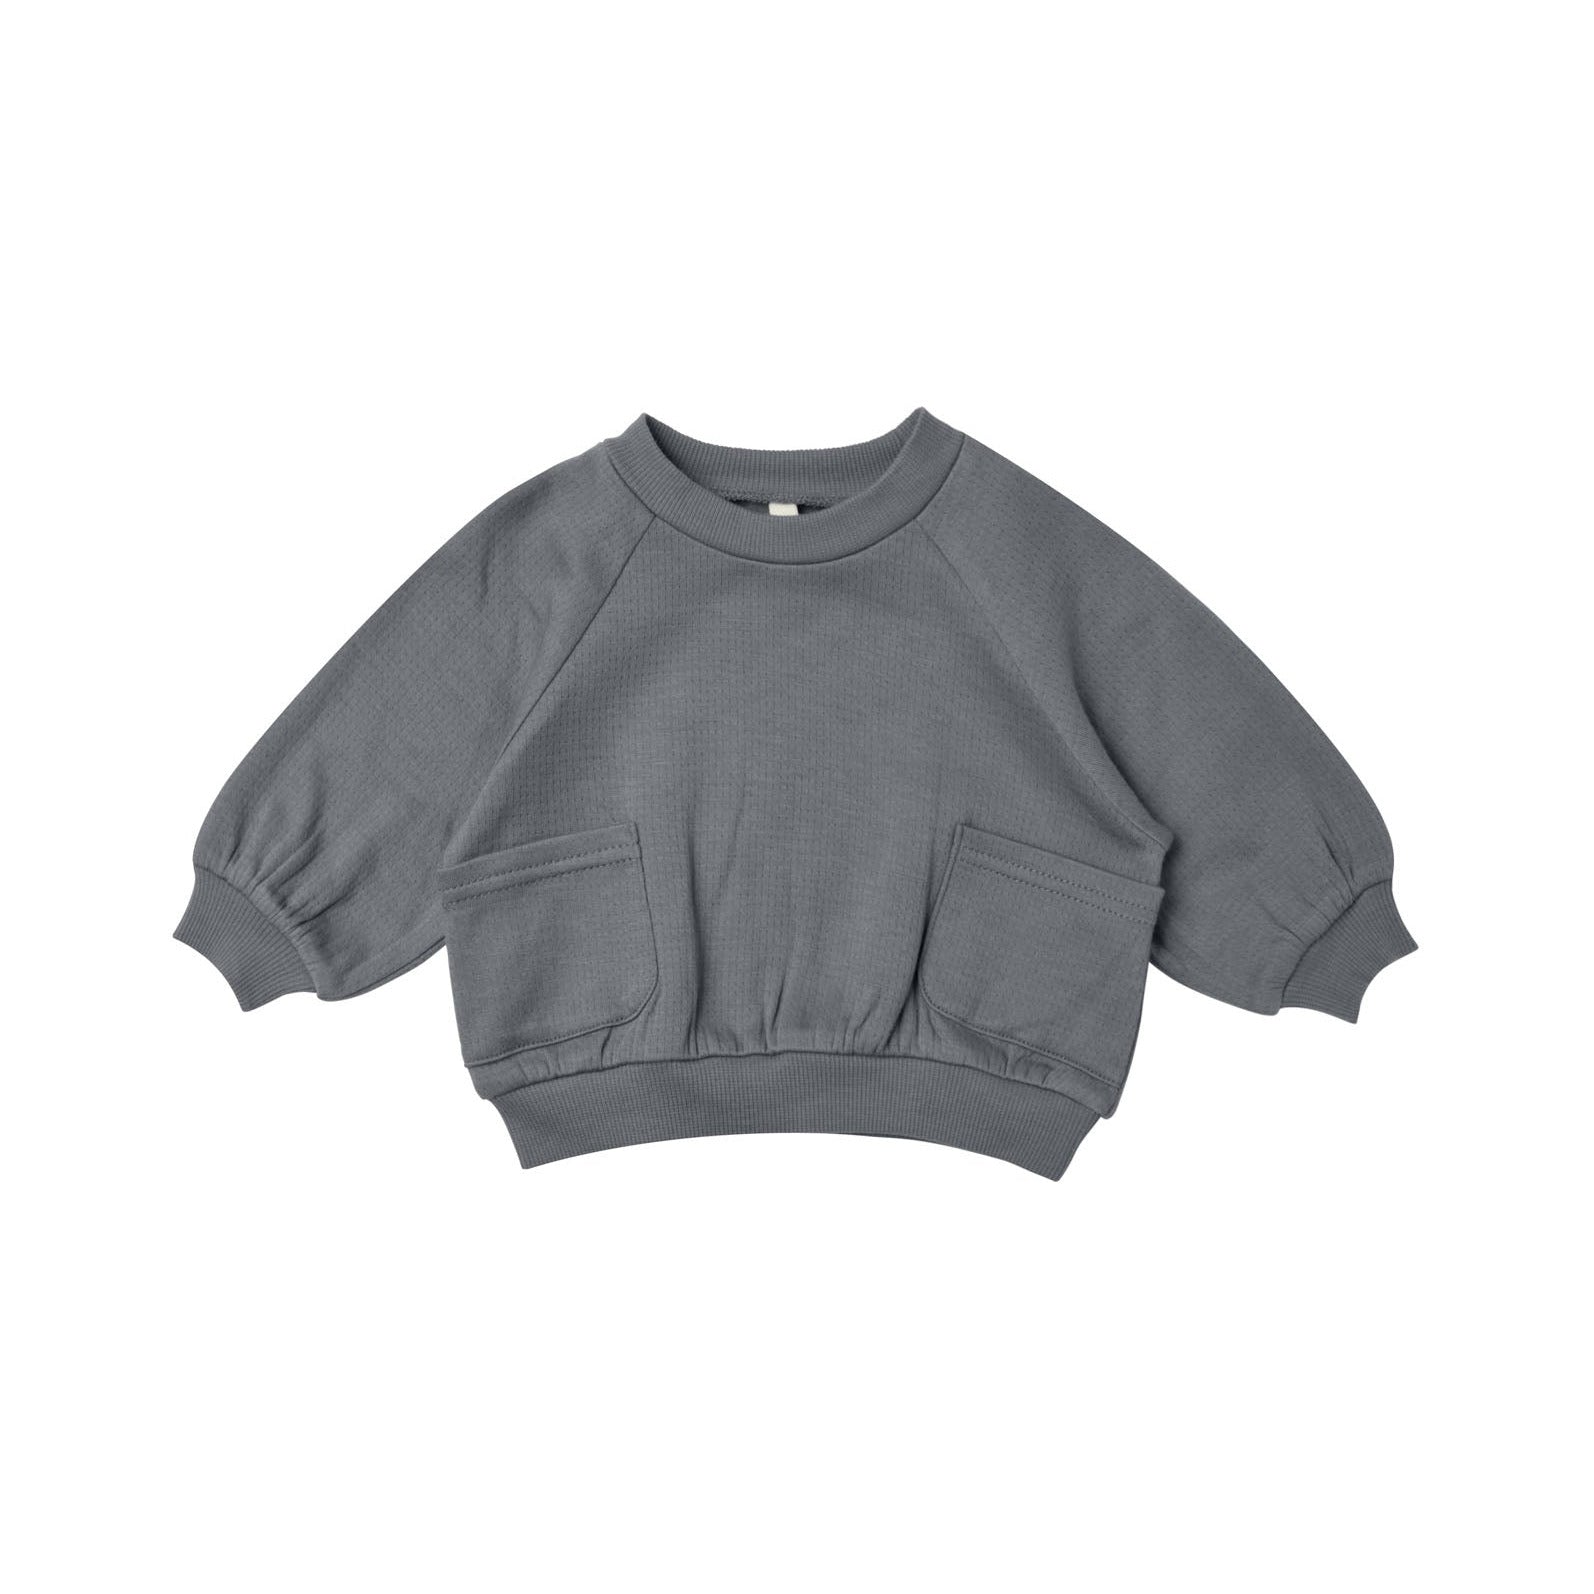 Navy Pocket Sweatshirt - Quincy Mae